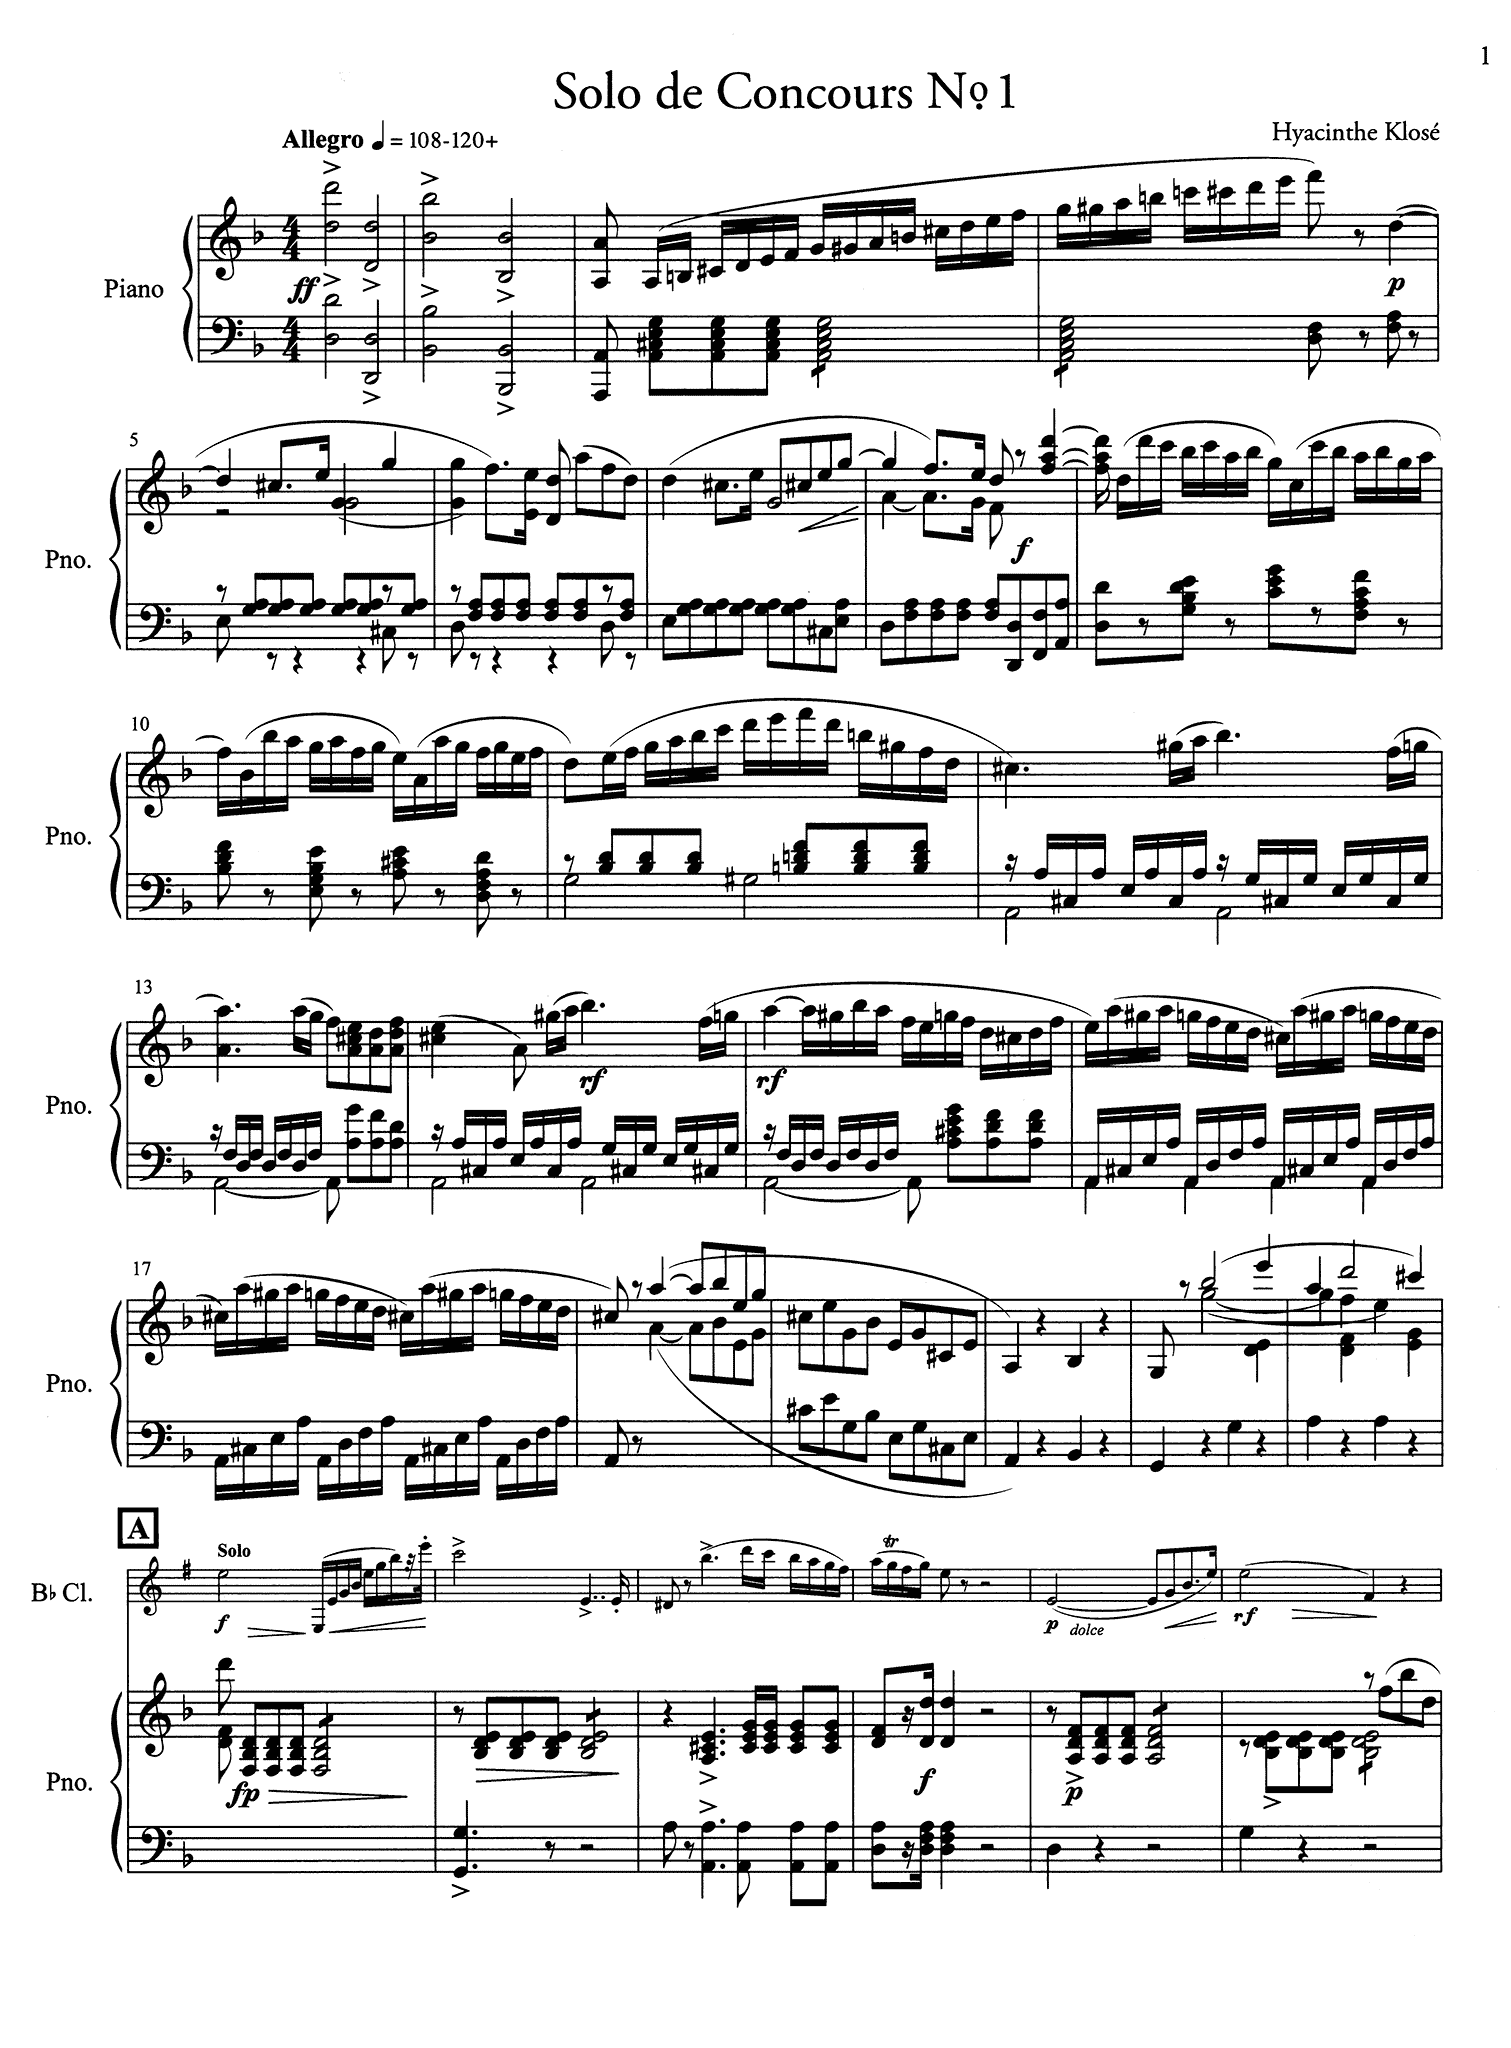 Klosé Solo de concours No. 1, Op. 9 clarinet and piano score